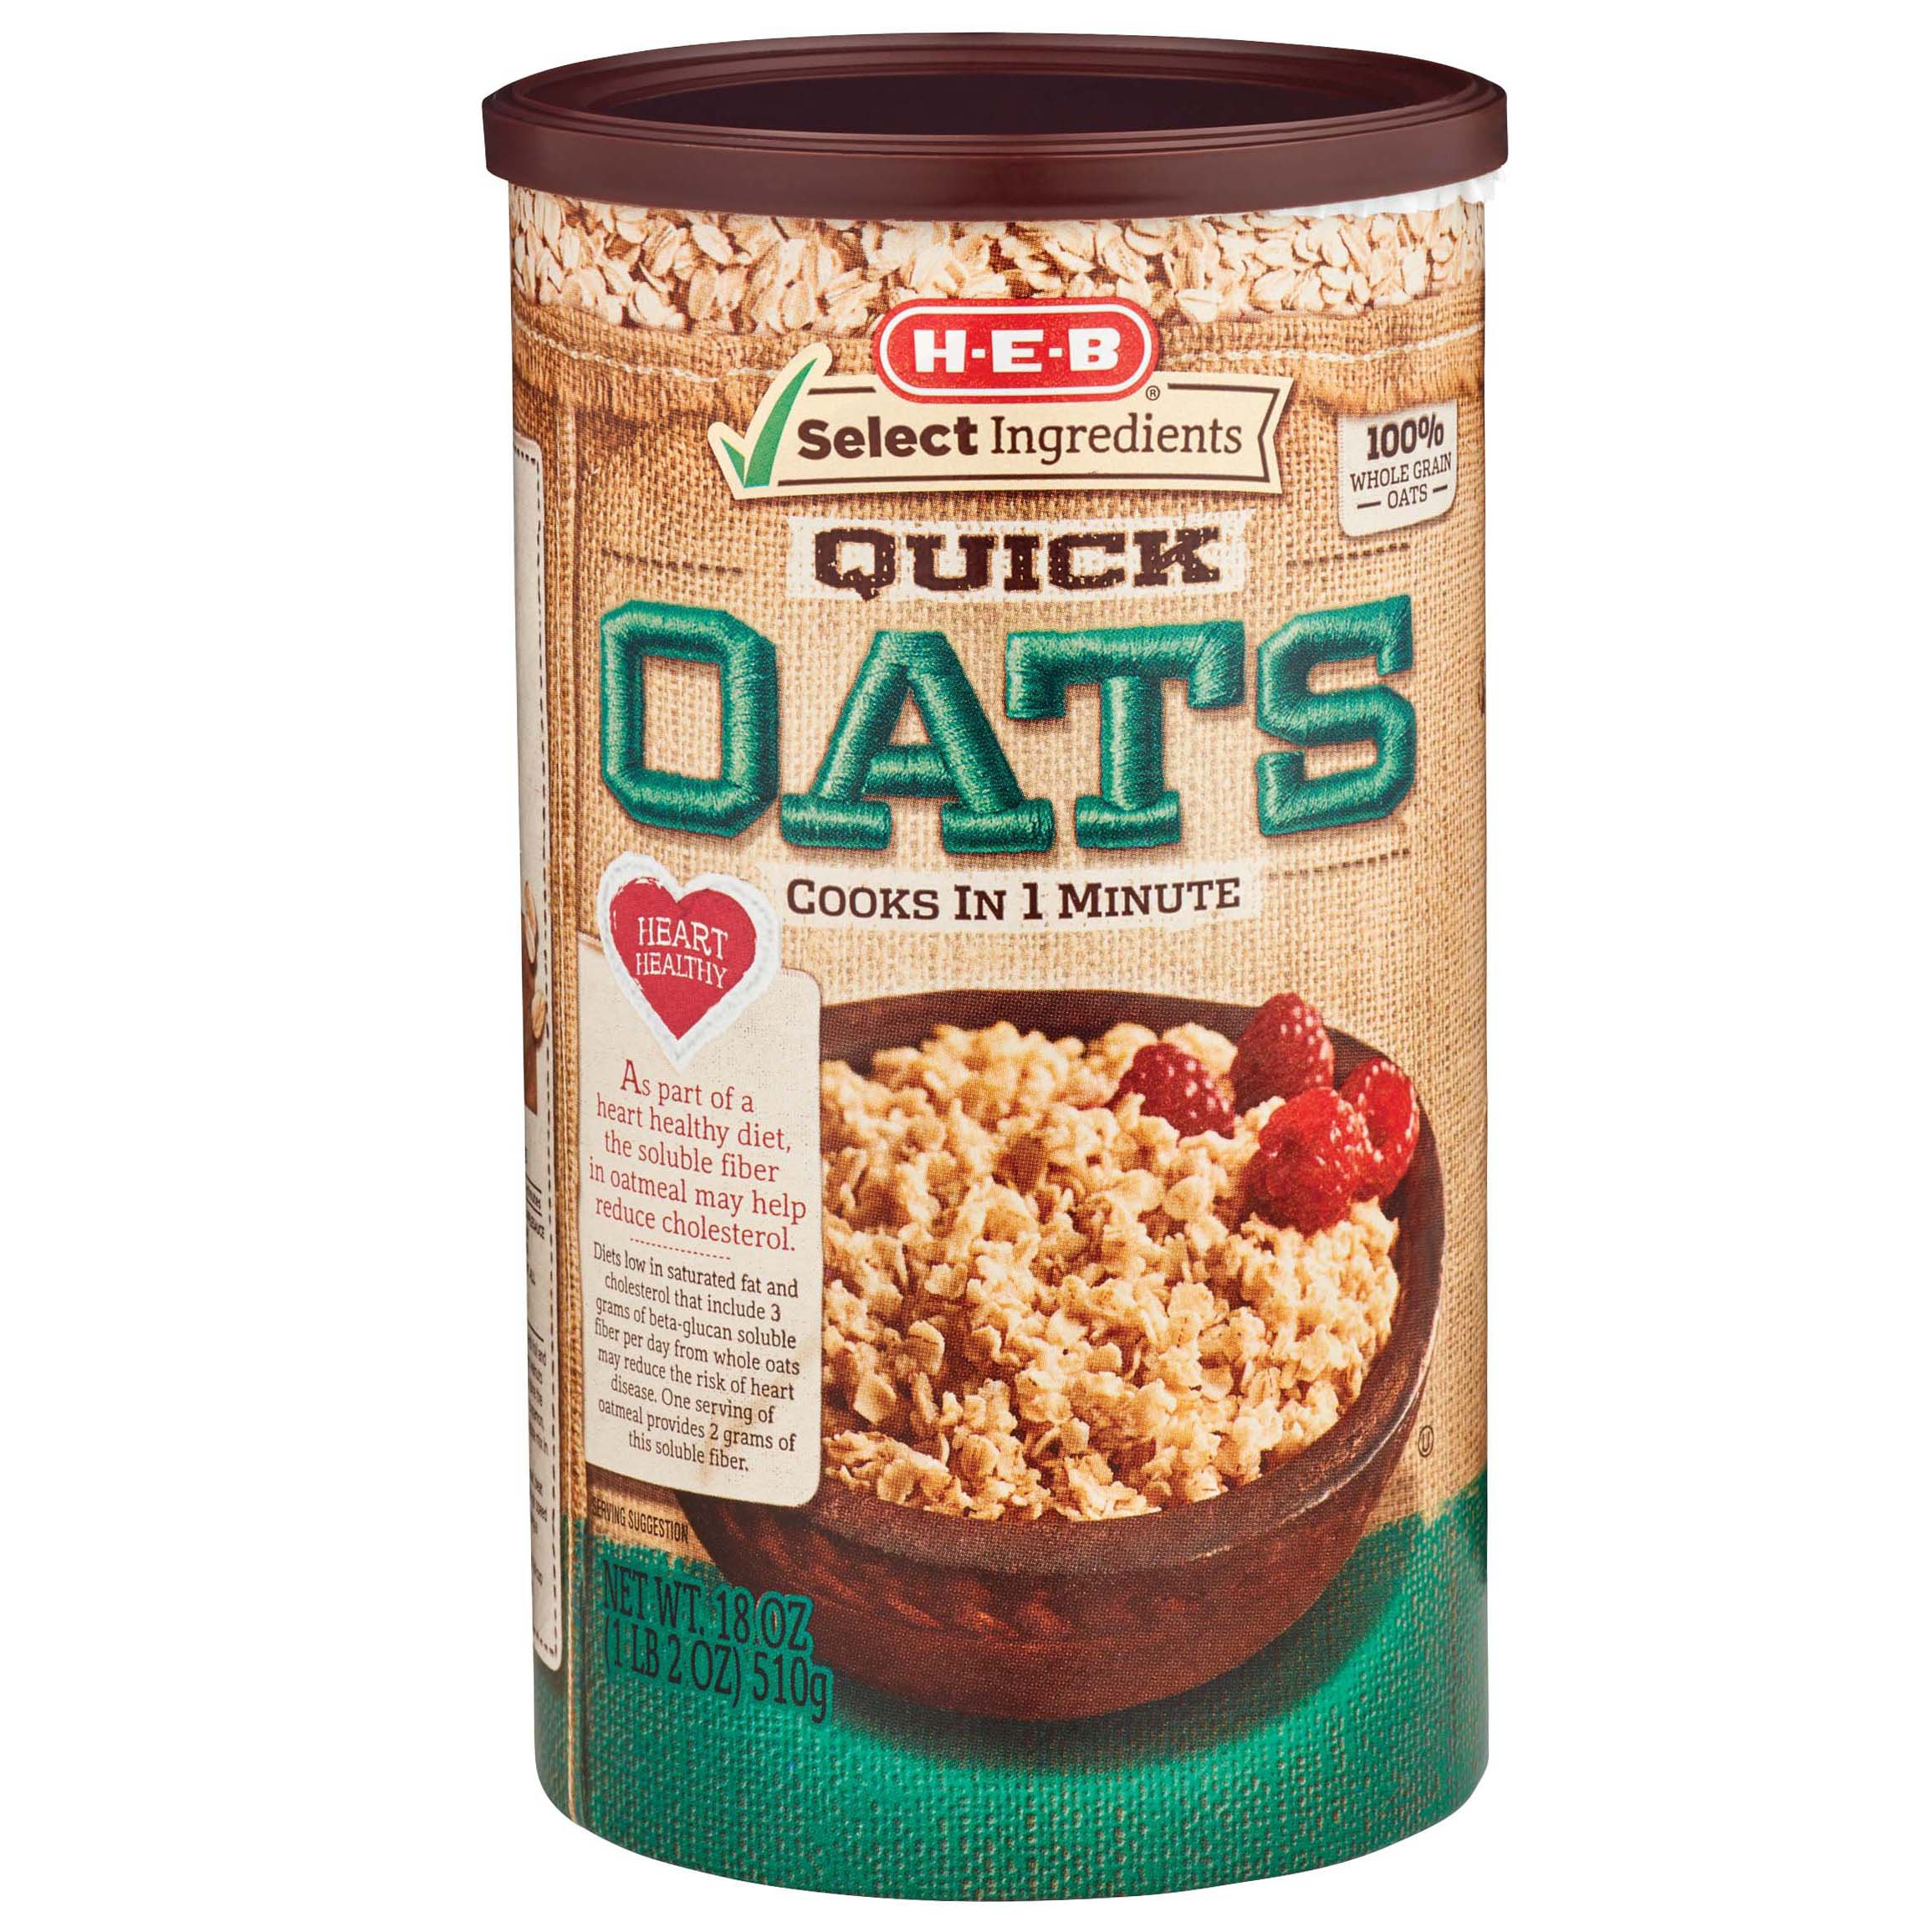 H-E-B Old Fashioned Oats Shop Oatmeal Hot Cereal At H-E-B, 53% OFF